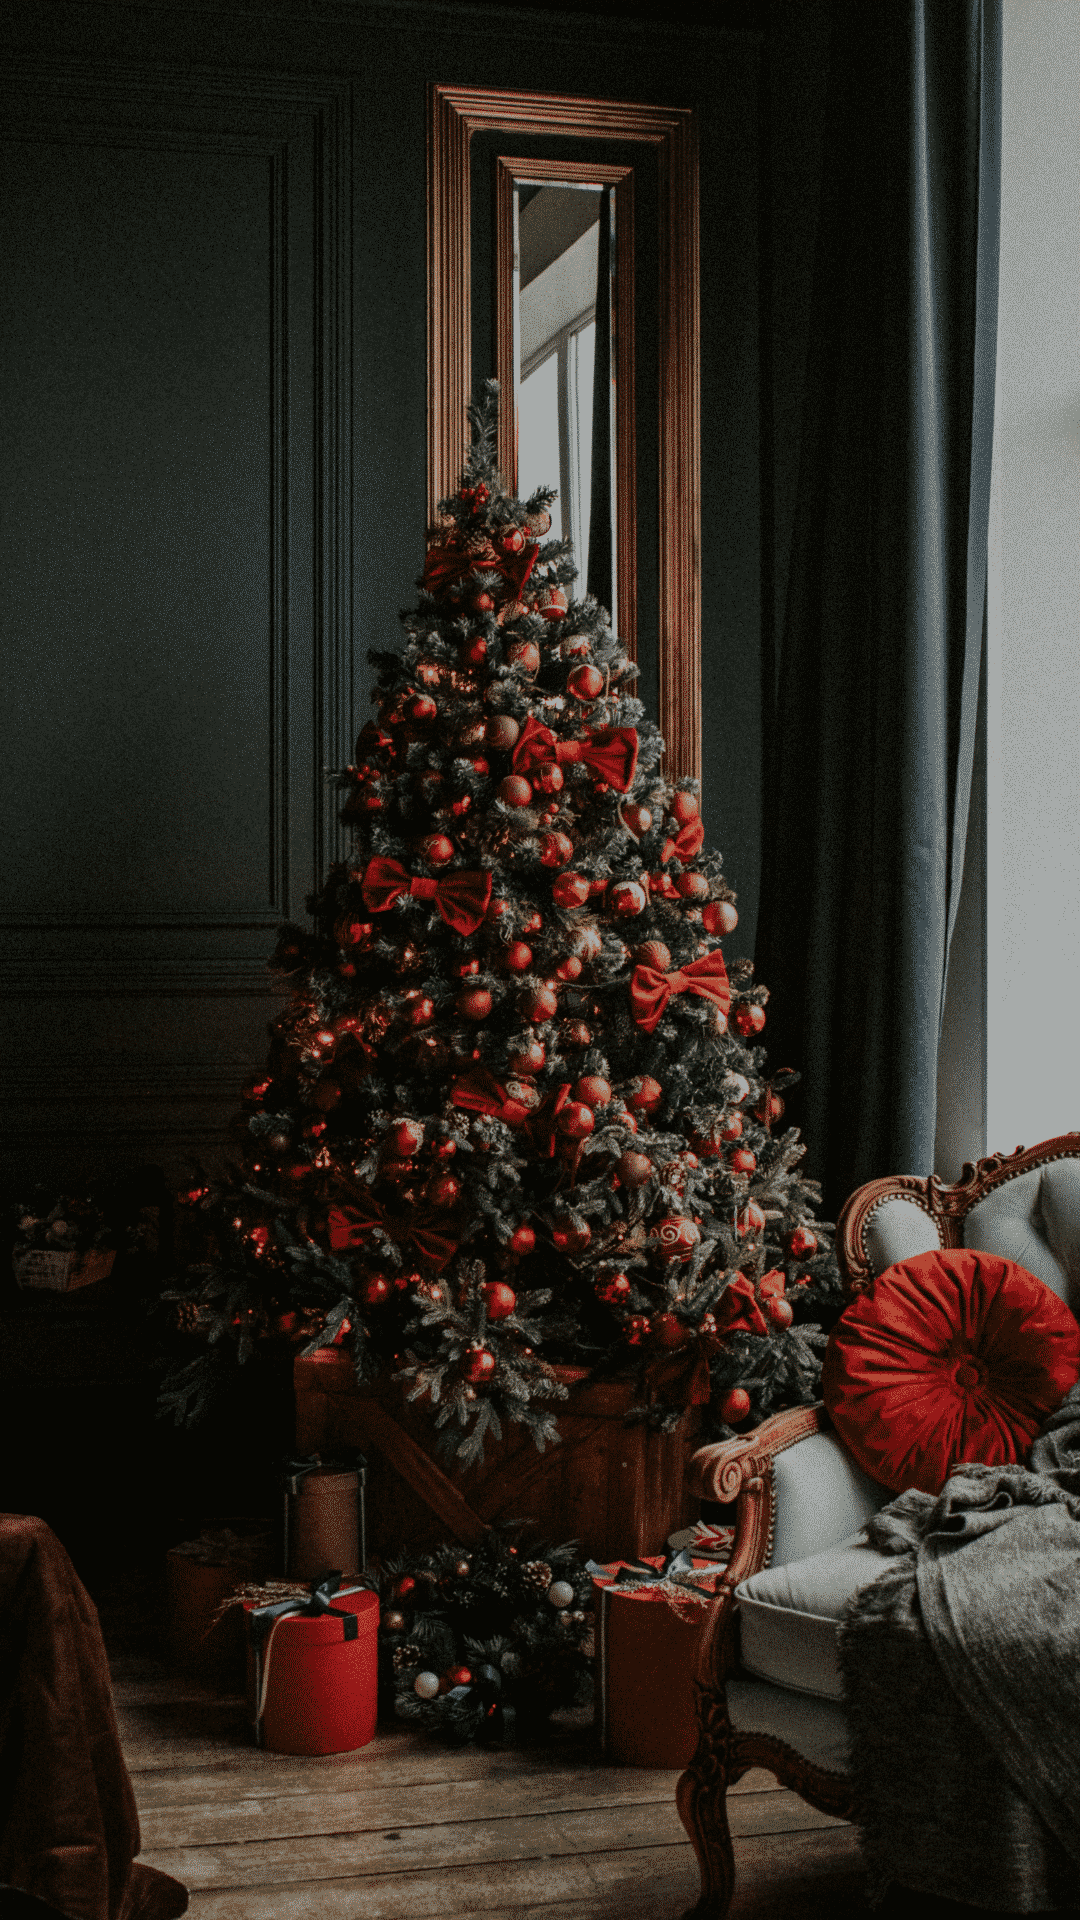  Weihnachts Hintergrundbild 1080x1920. FREE Aesthetic Christmas Wallpaper For A Festive Phone